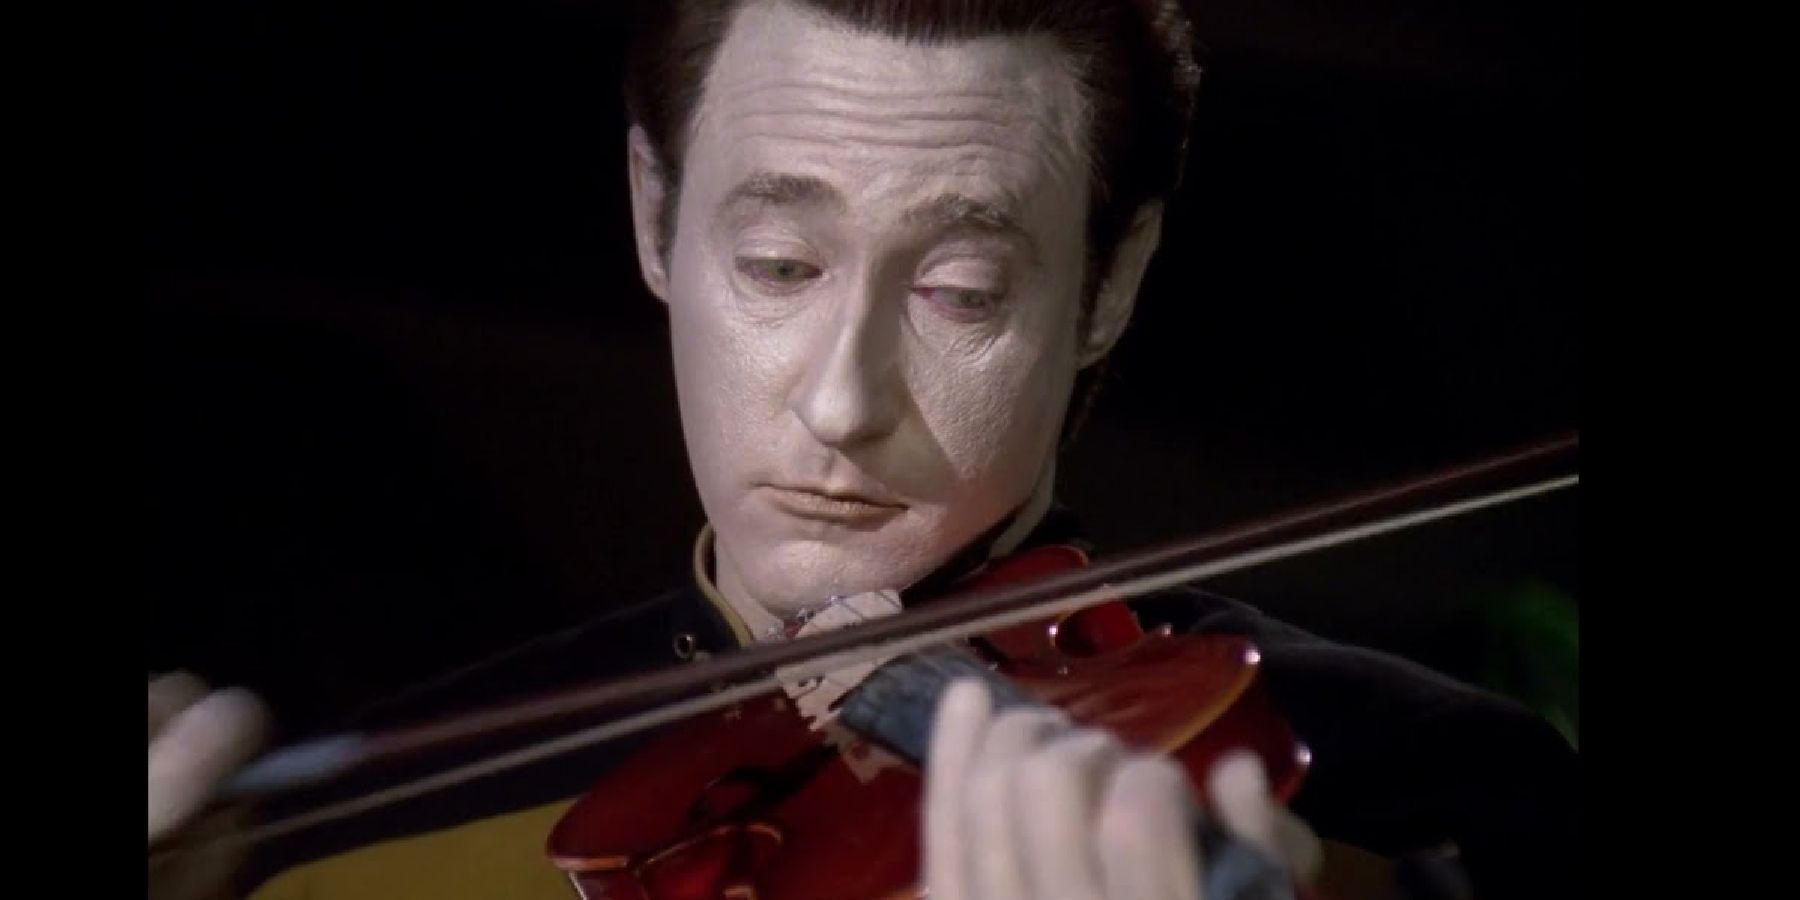 Data plays the violin in Star Trek: The Next Generation